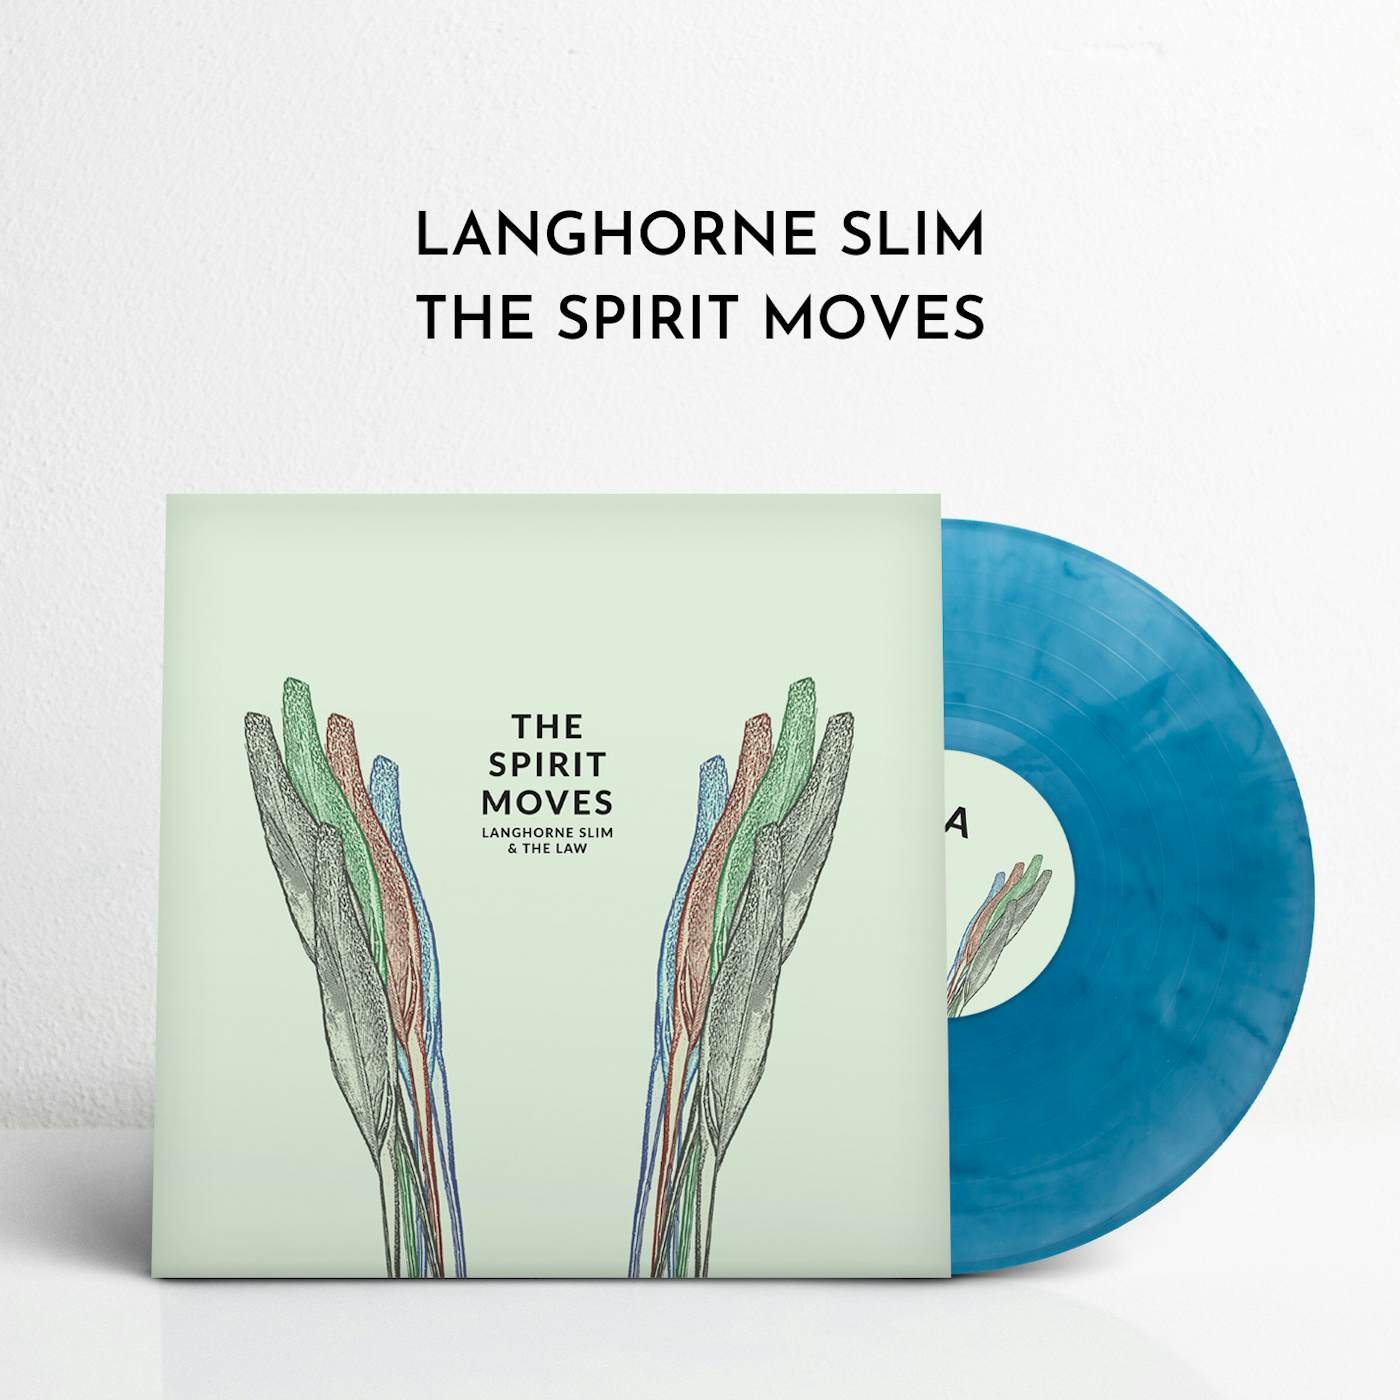 Langhorne Slim The Spirit Moves (Ltd. Edition Vinyl)